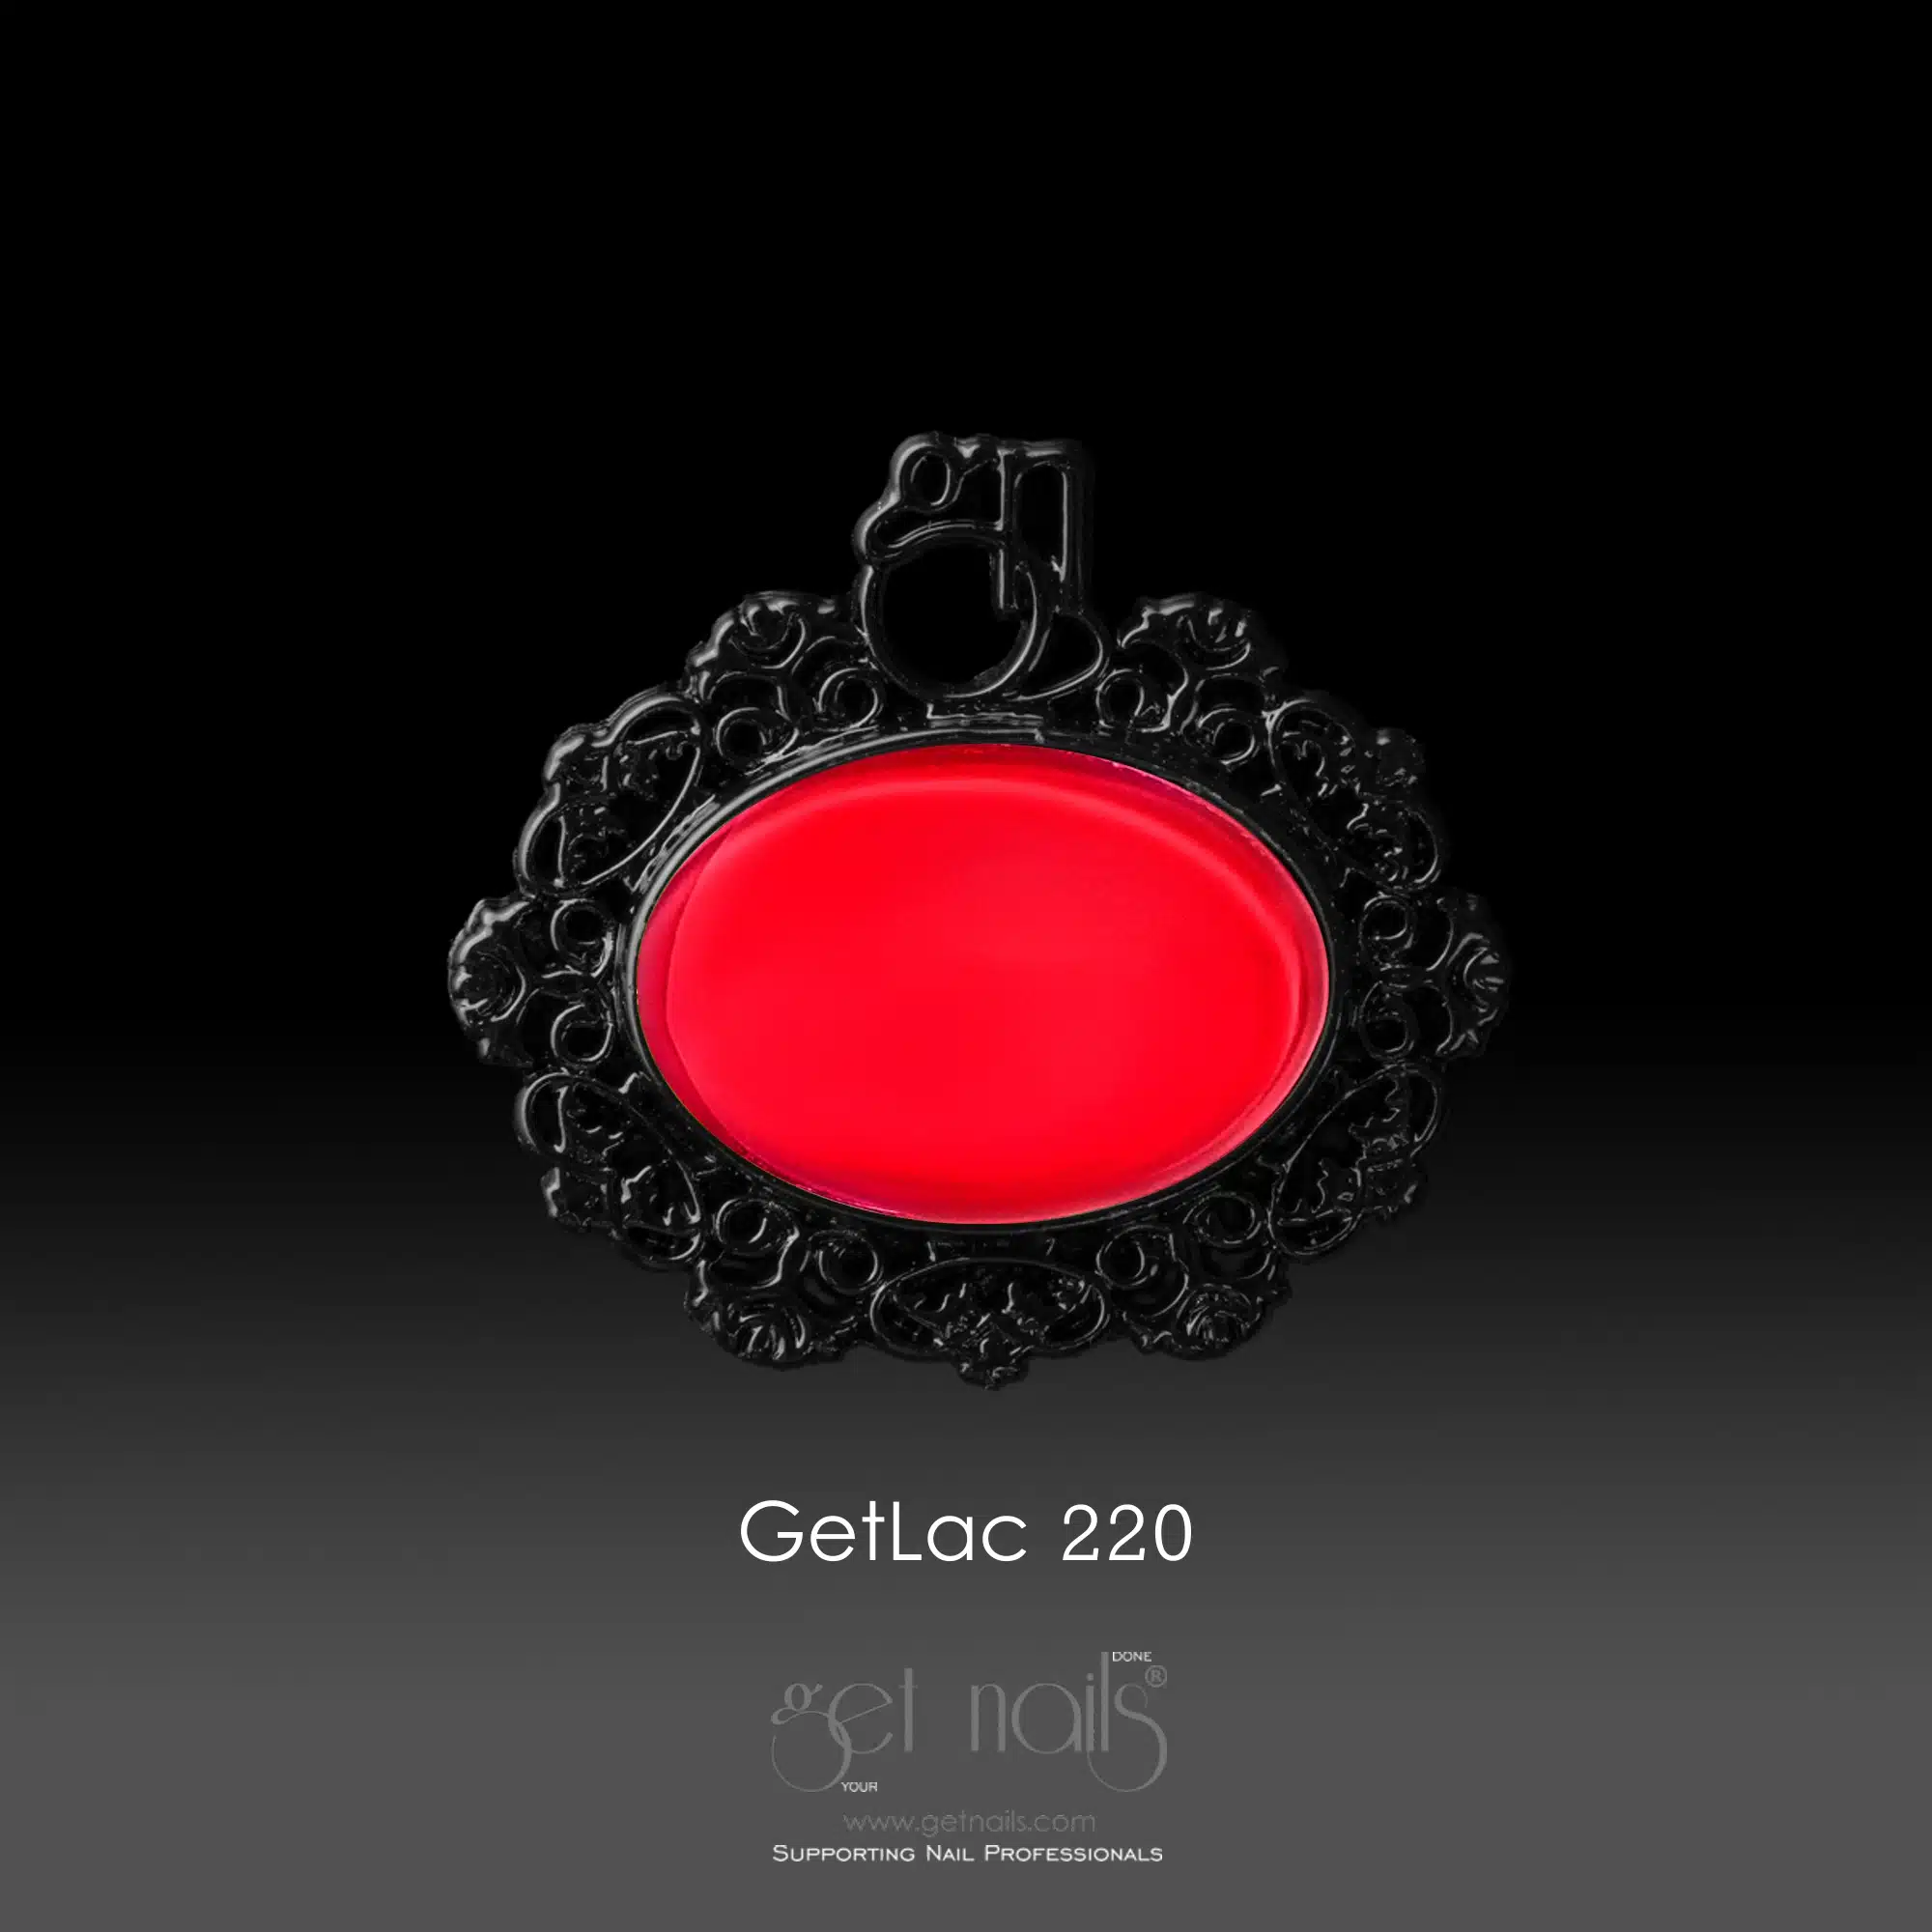 Get Nails Austria - GetLac 220 Neon Coral 15g